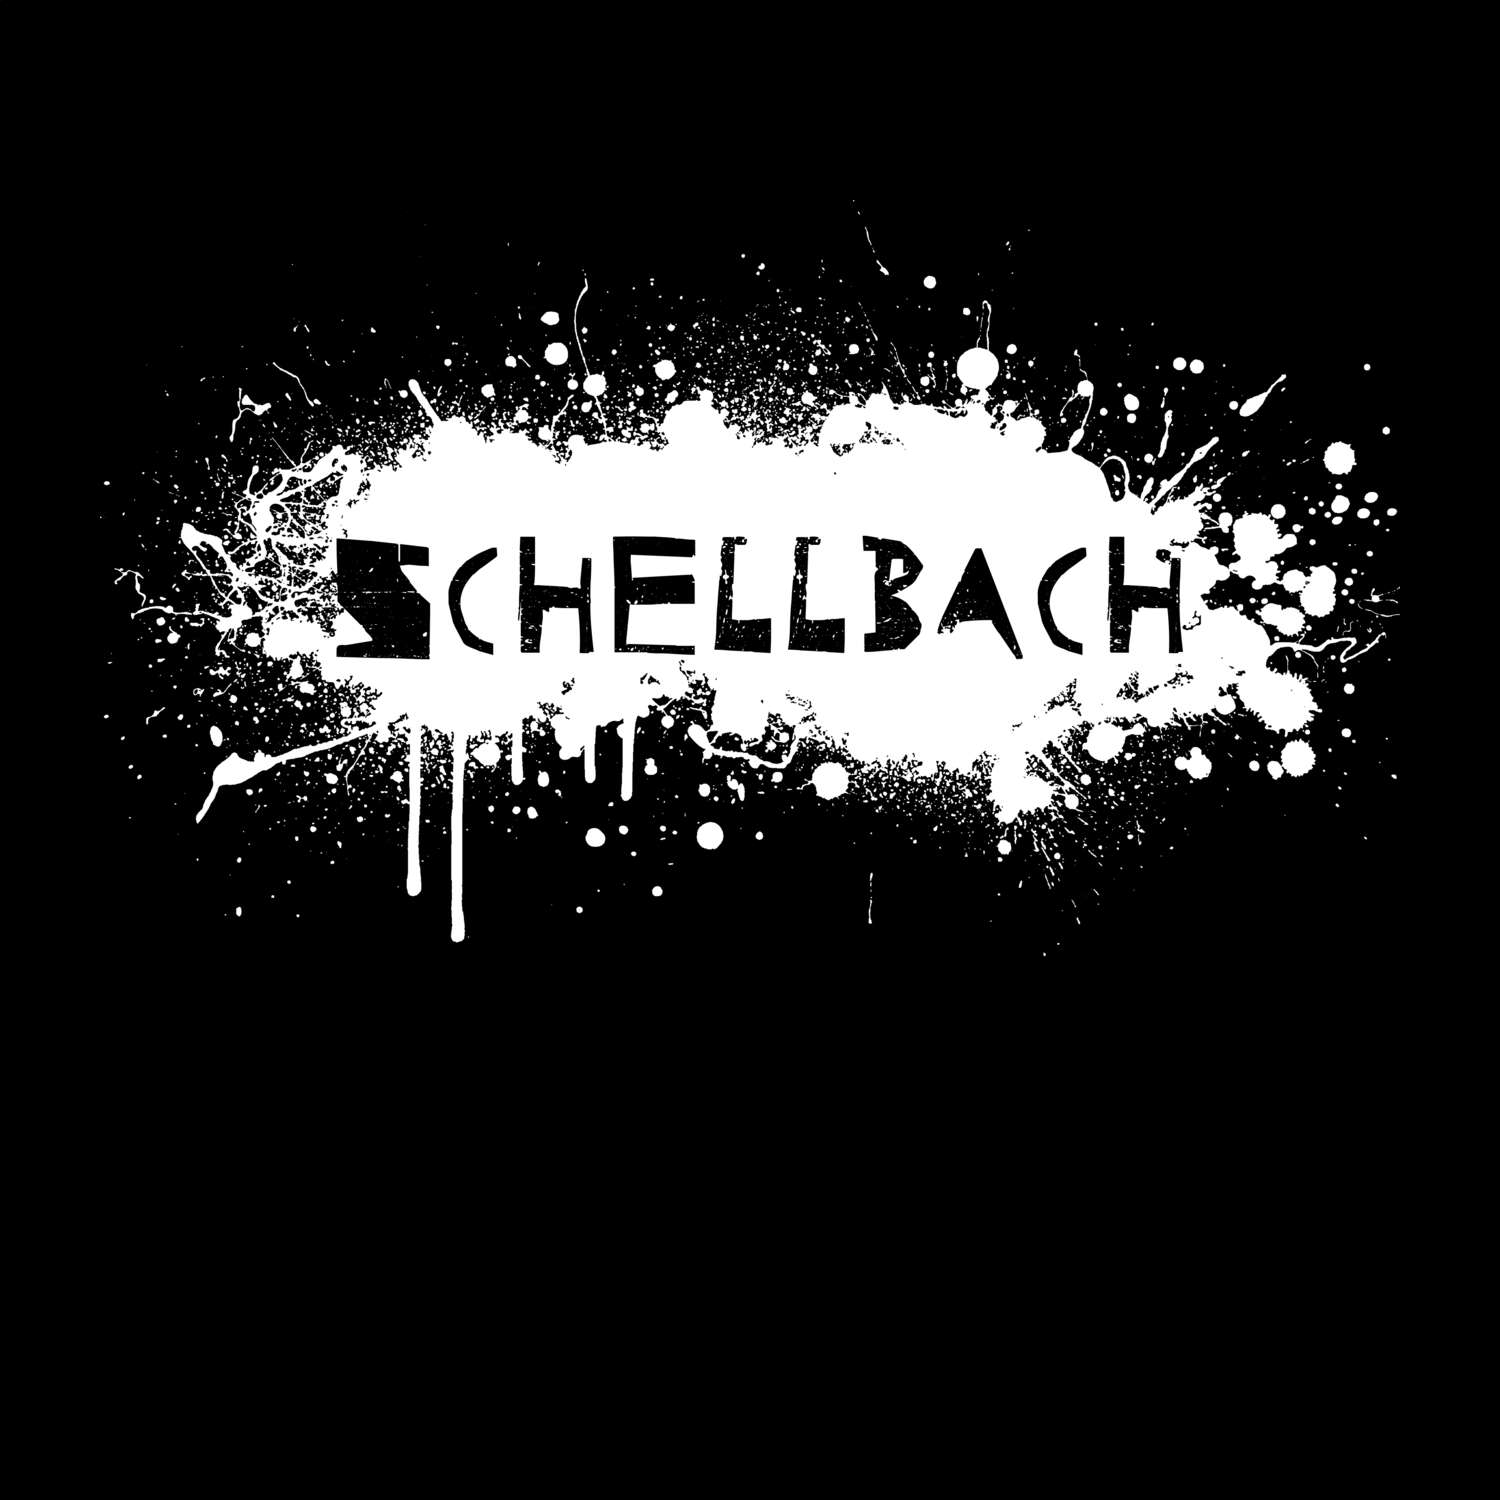 Schellbach T-Shirt »Paint Splash Punk«